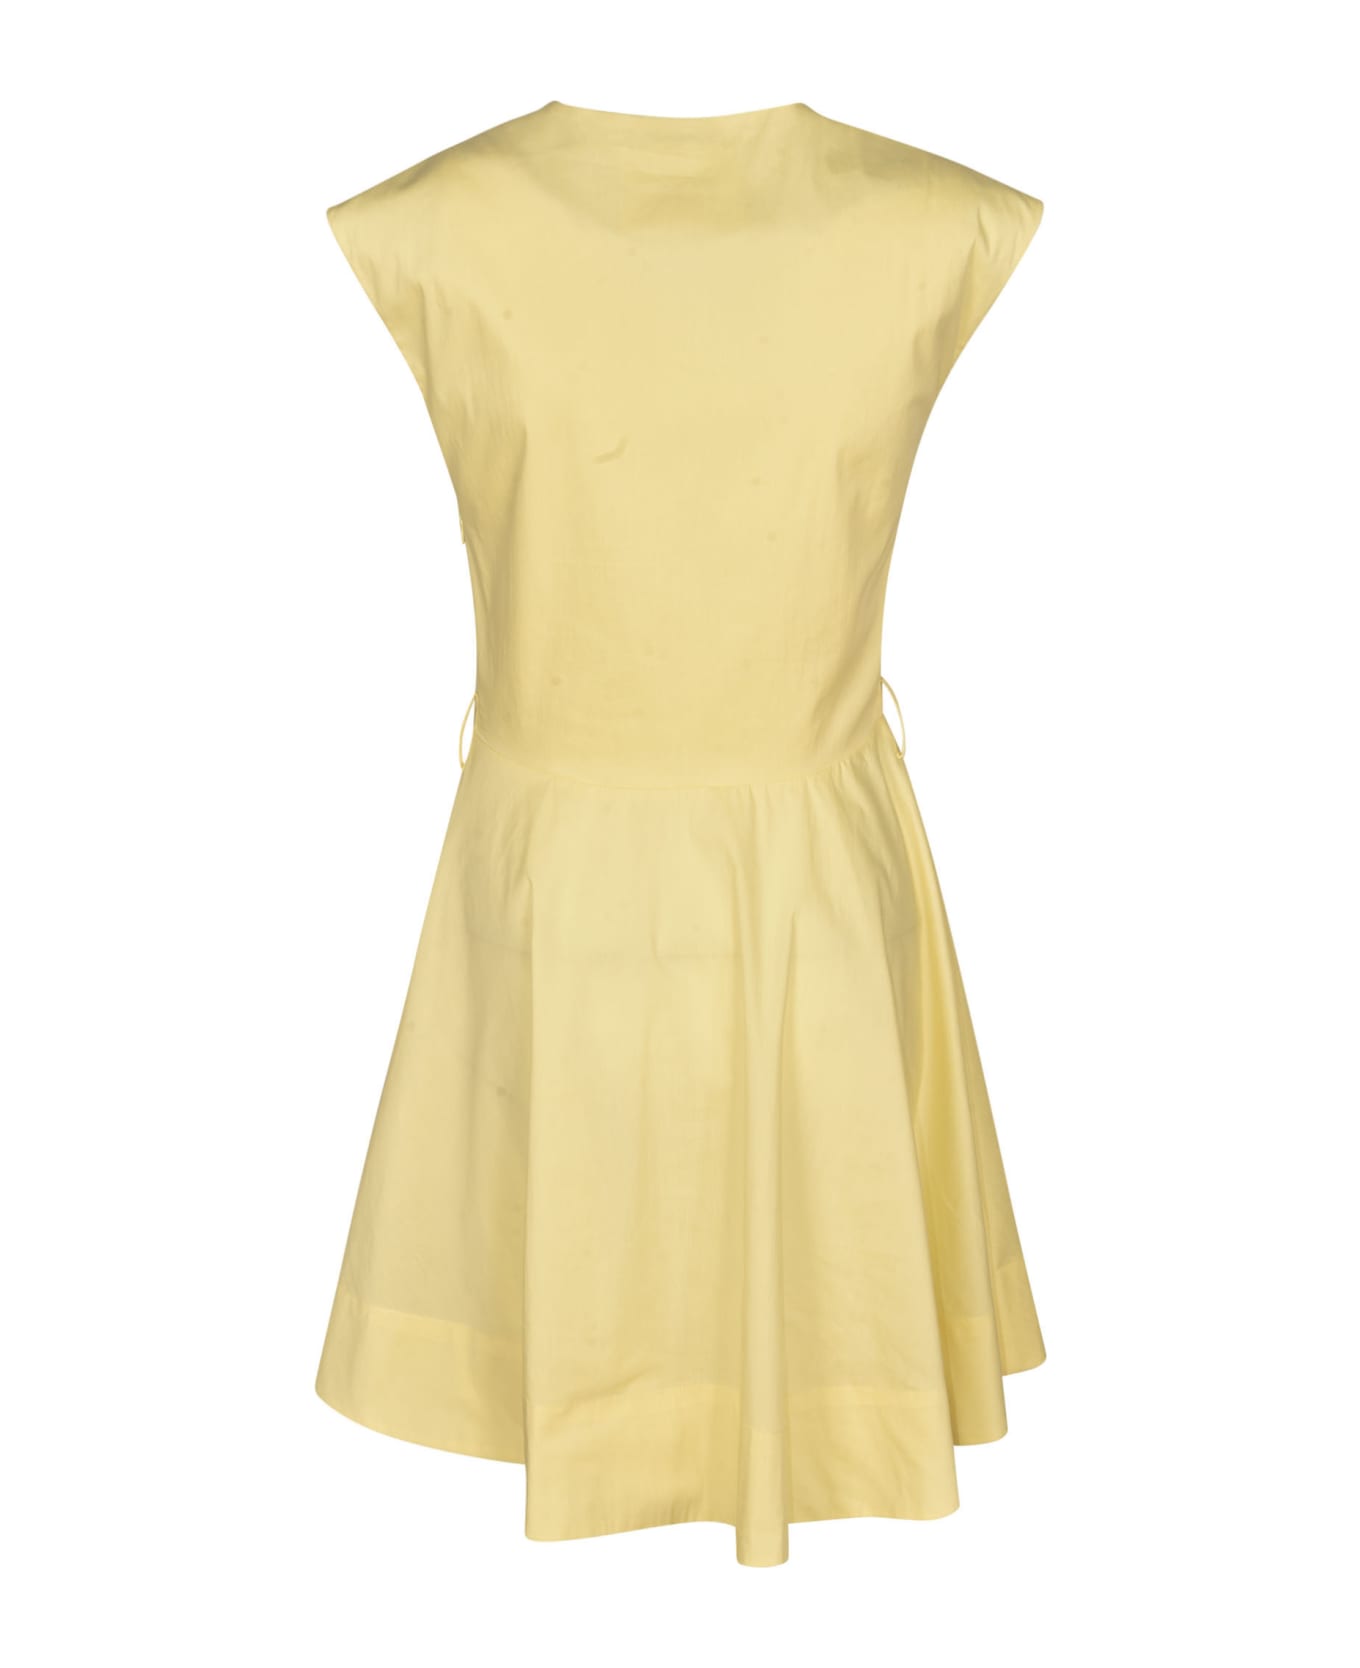 Blugirl V-neck Sleeveless Flare Dress - Yellow ワンピース＆ドレス